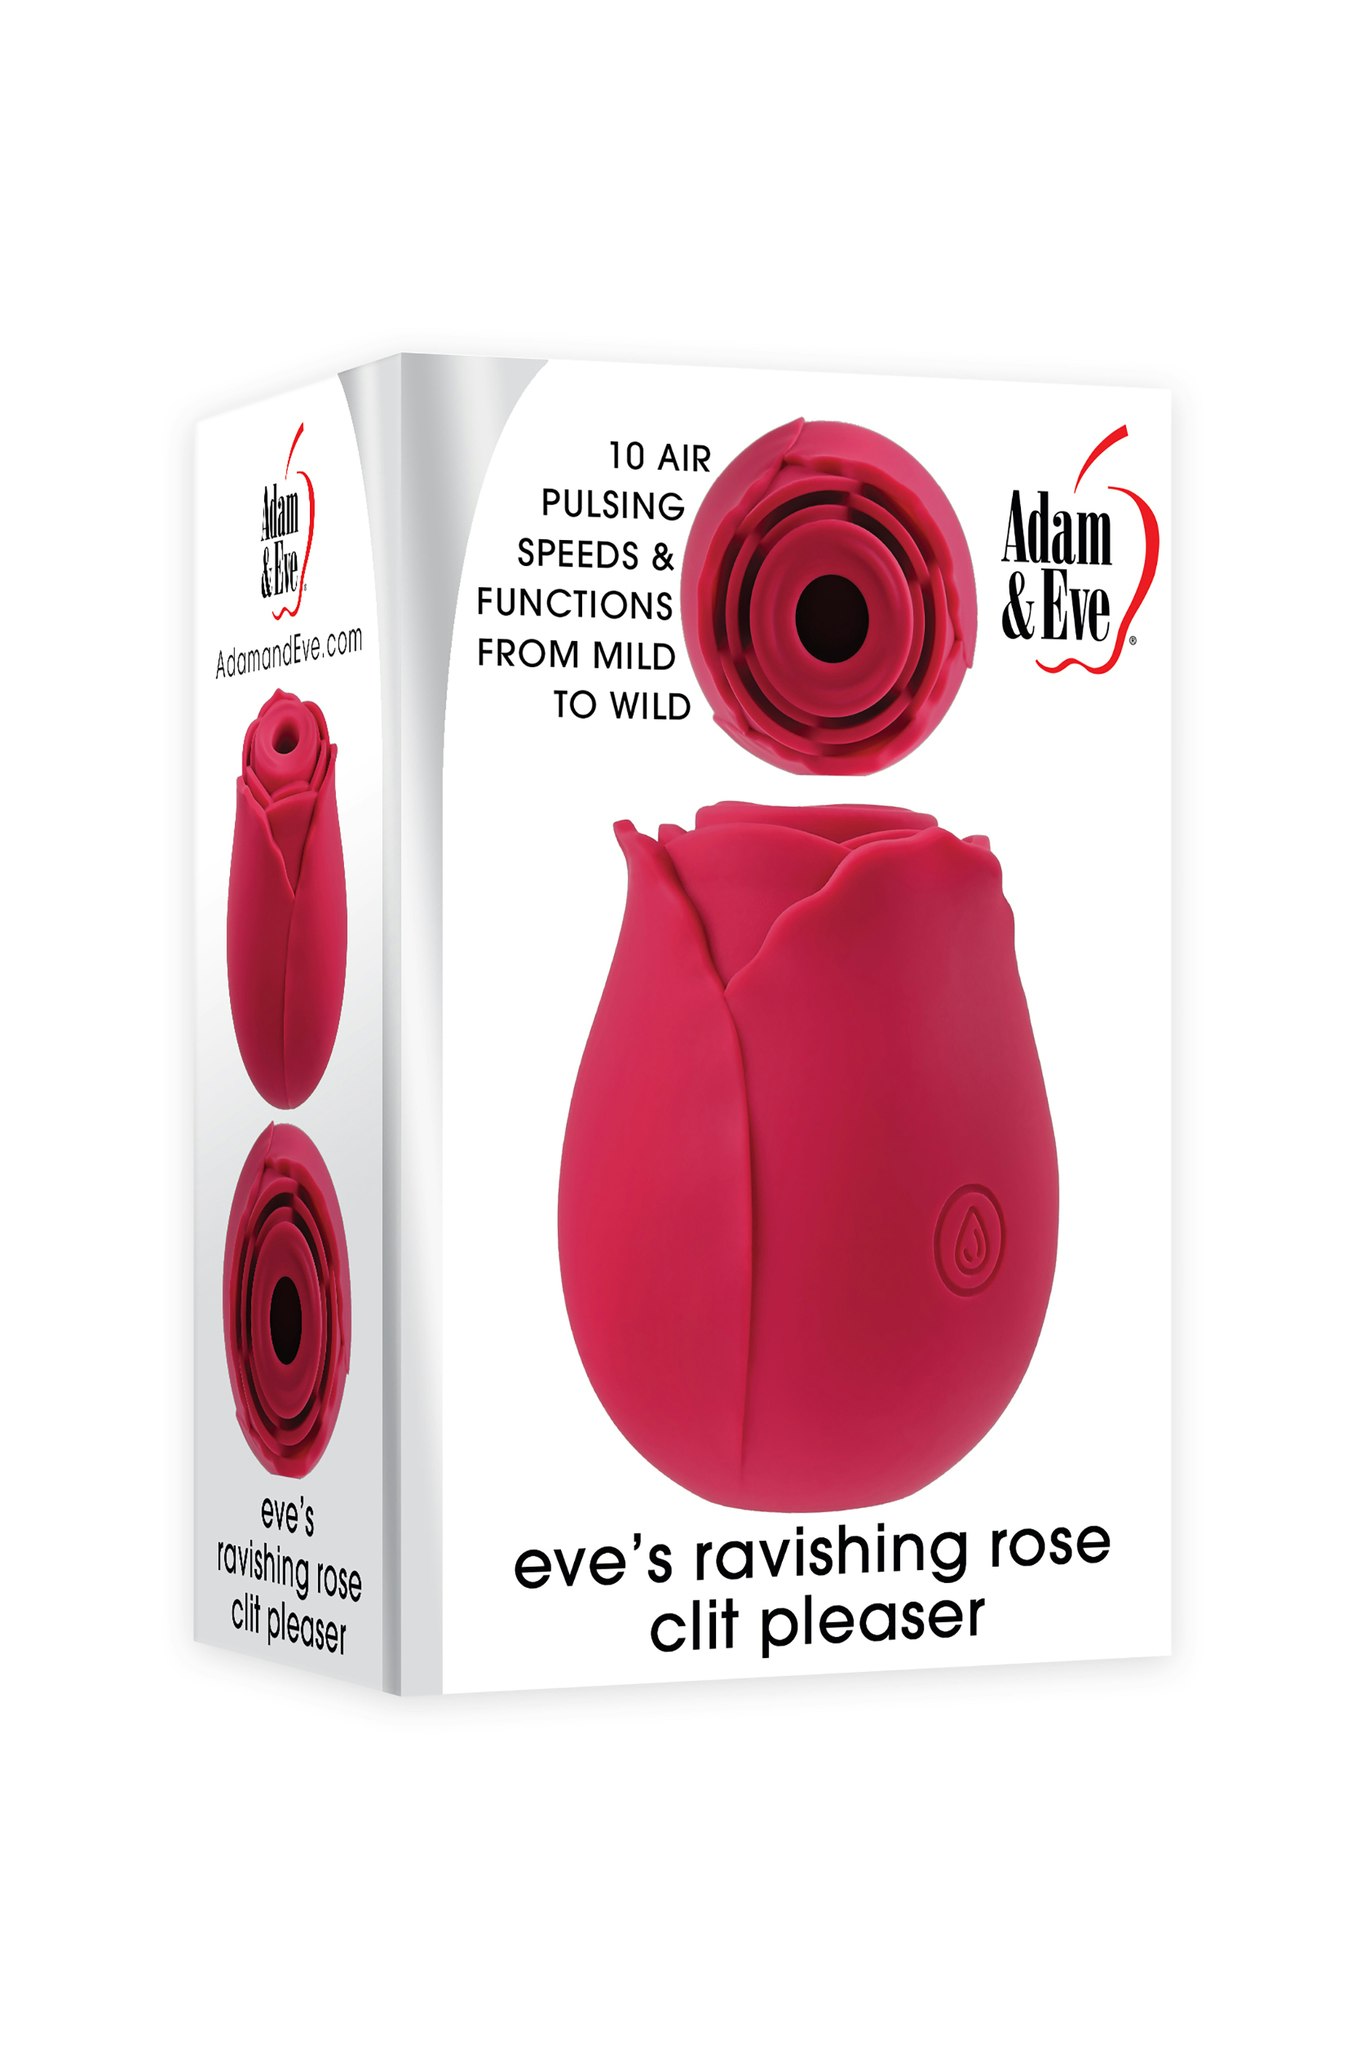 Adam & Eve's Ravishing rose clit pleaser